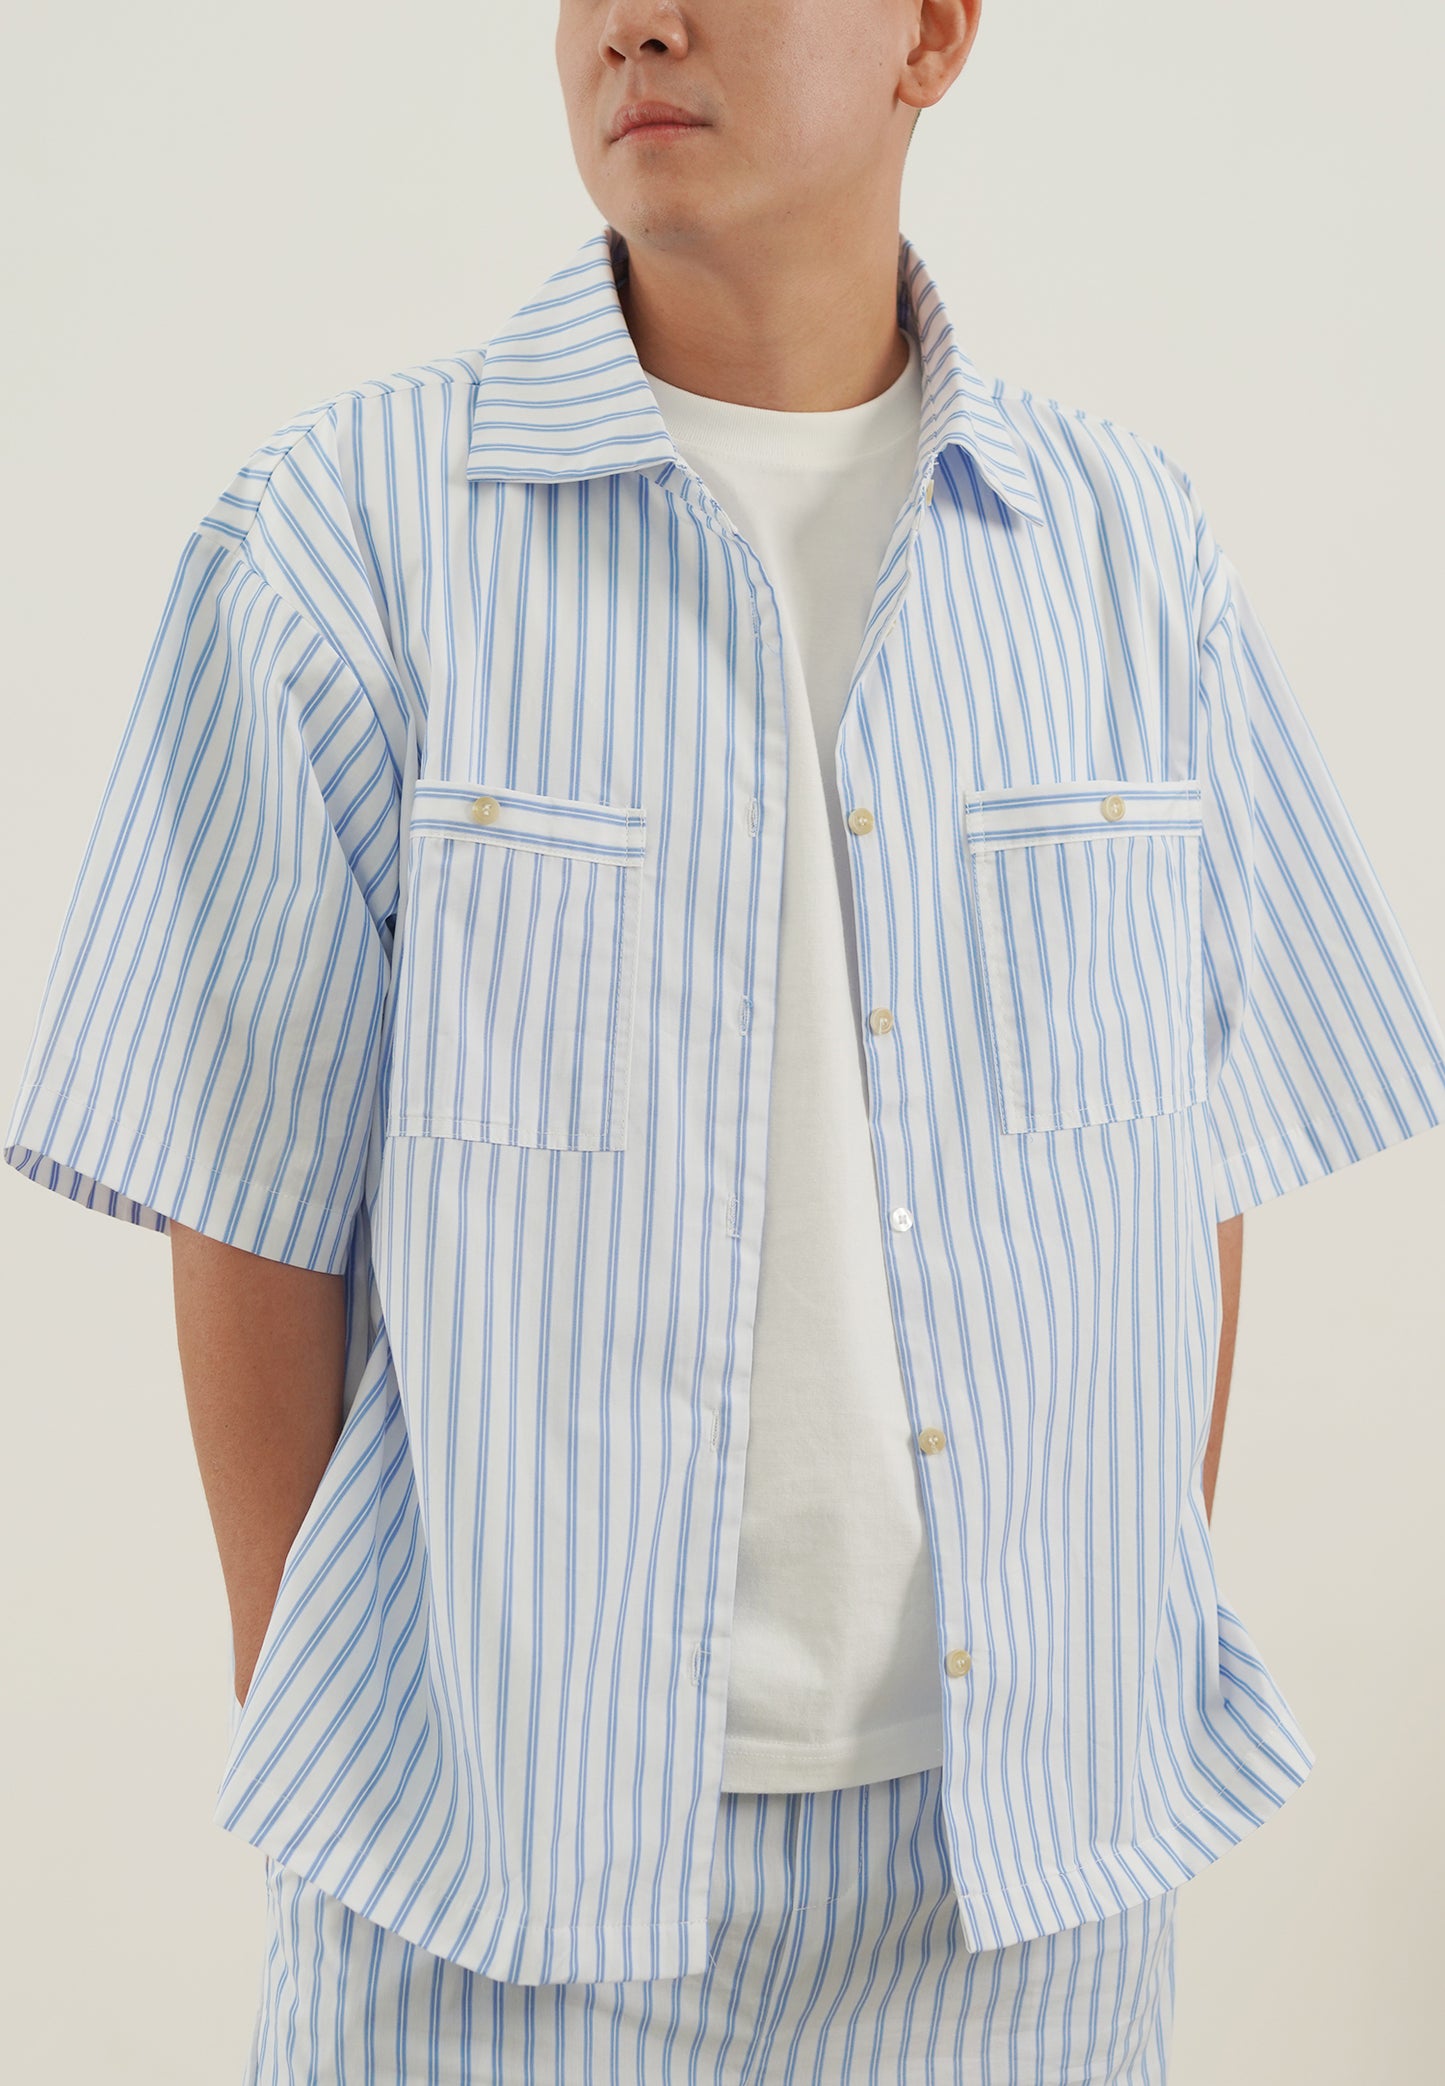 Snuggle Collar Striped Shirt light blue